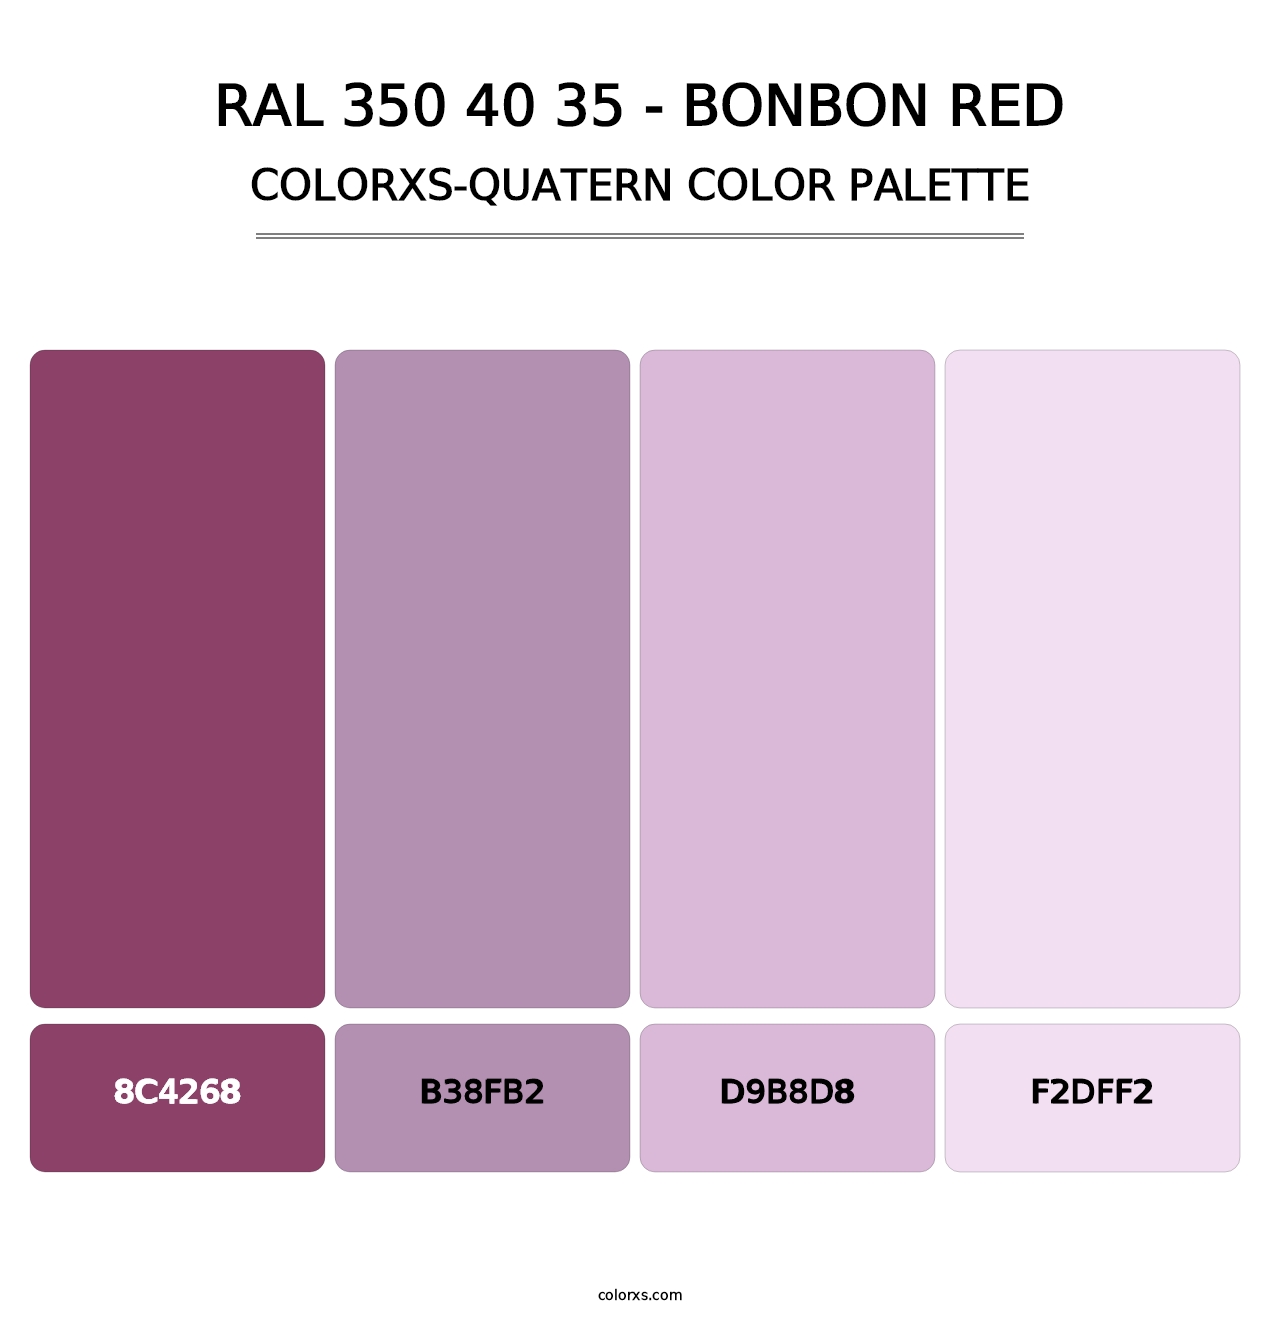 RAL 350 40 35 - Bonbon Red - Colorxs Quatern Palette